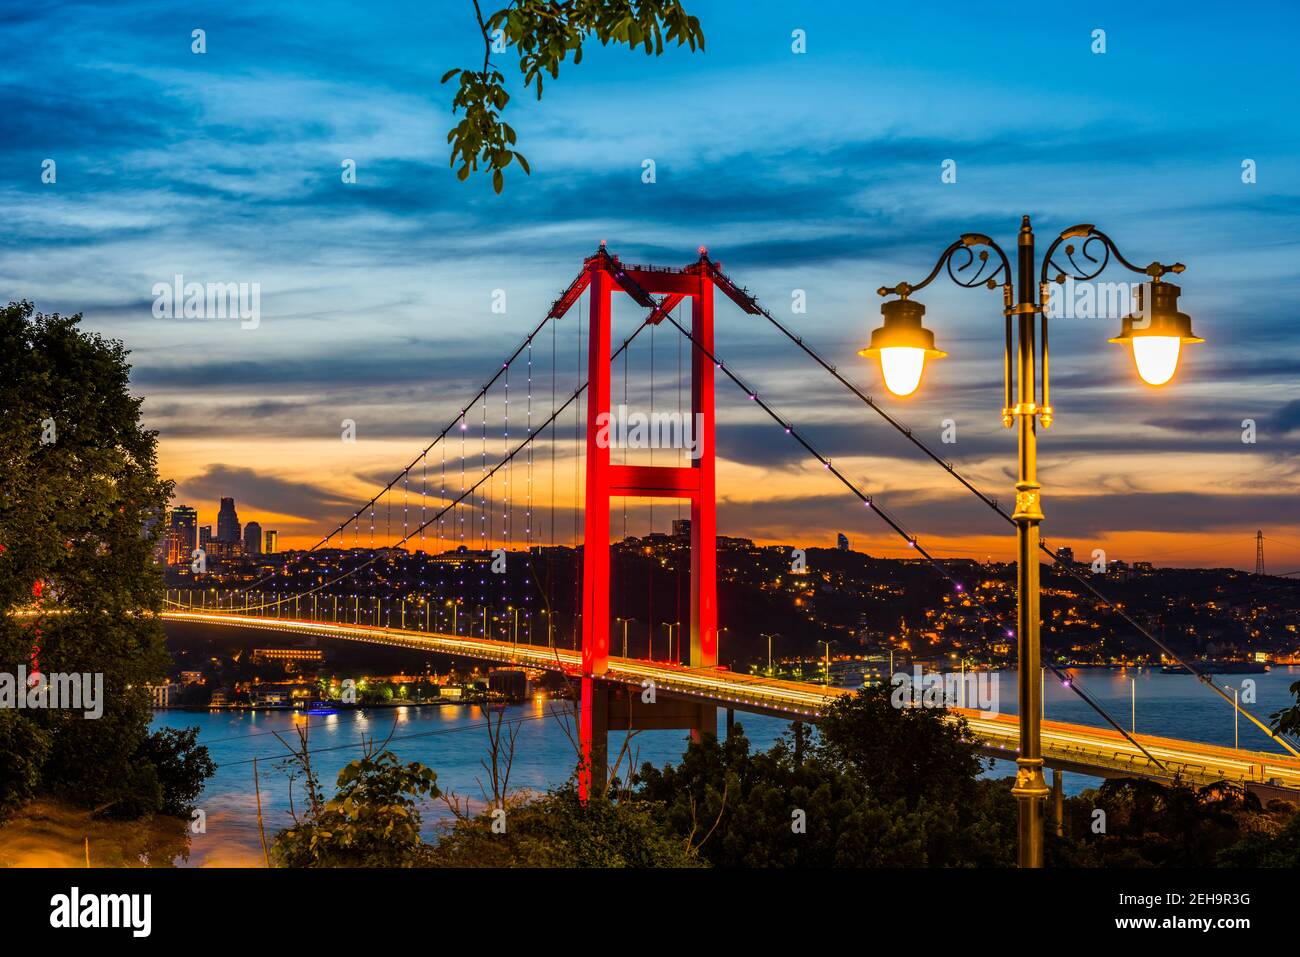 ISTANBUL, TÜRKEI. Panoramablick auf Istanbul Bosporus bei Sonnenuntergang. Istanbul Bosporus Brücke (15 Juli Martyrs Brücke. Türkisch: 15 Temmus Sehitler Kopru Stockfoto